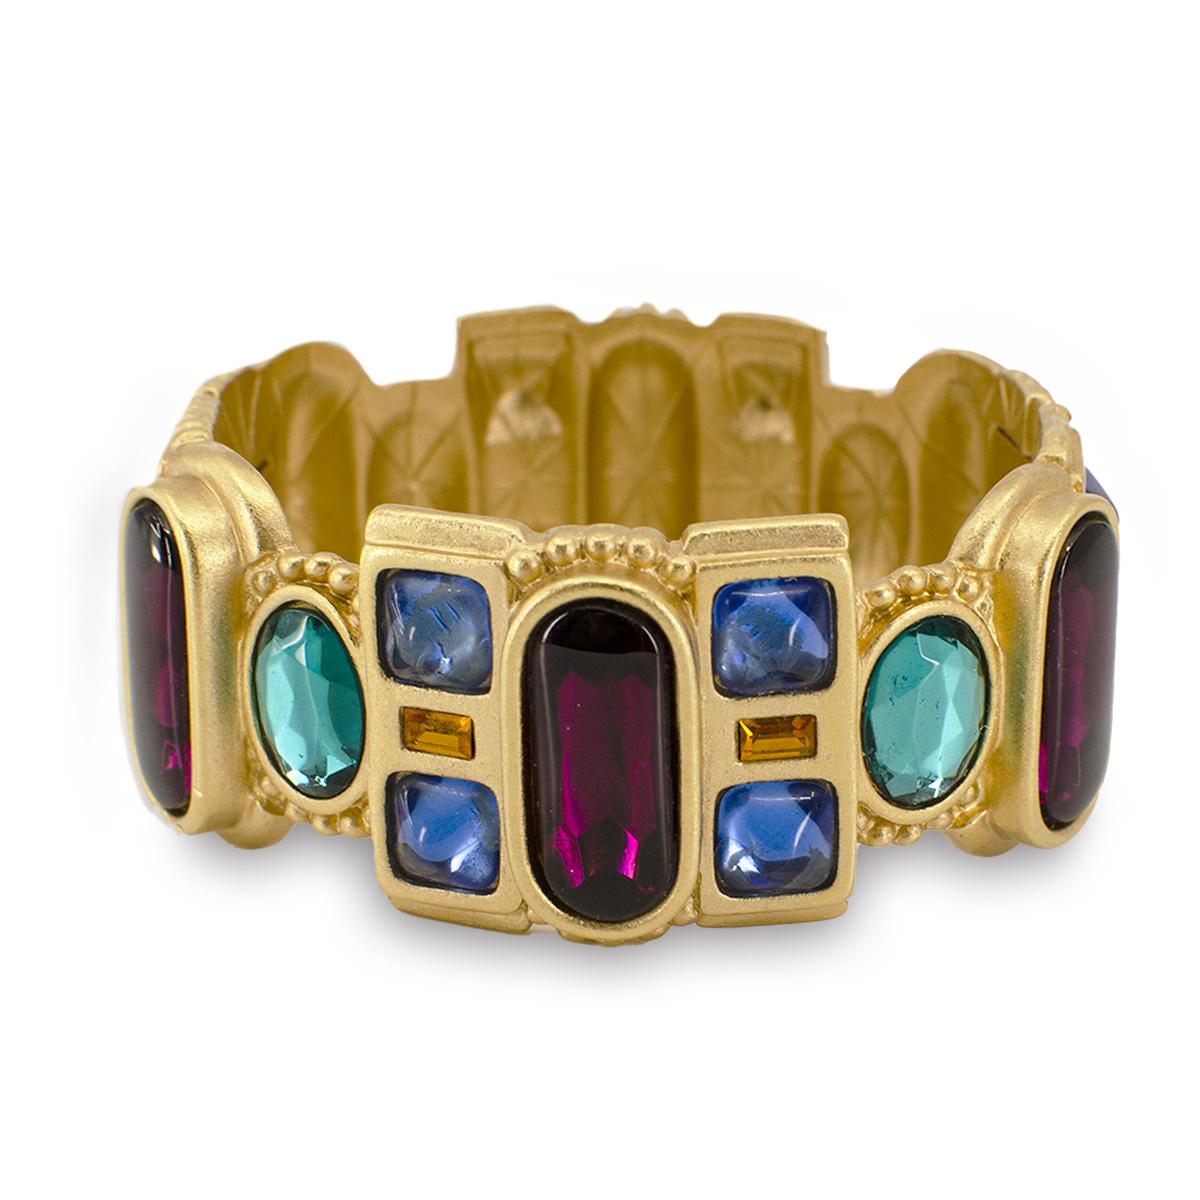 YSl jeweled bracelet Etruscan revival